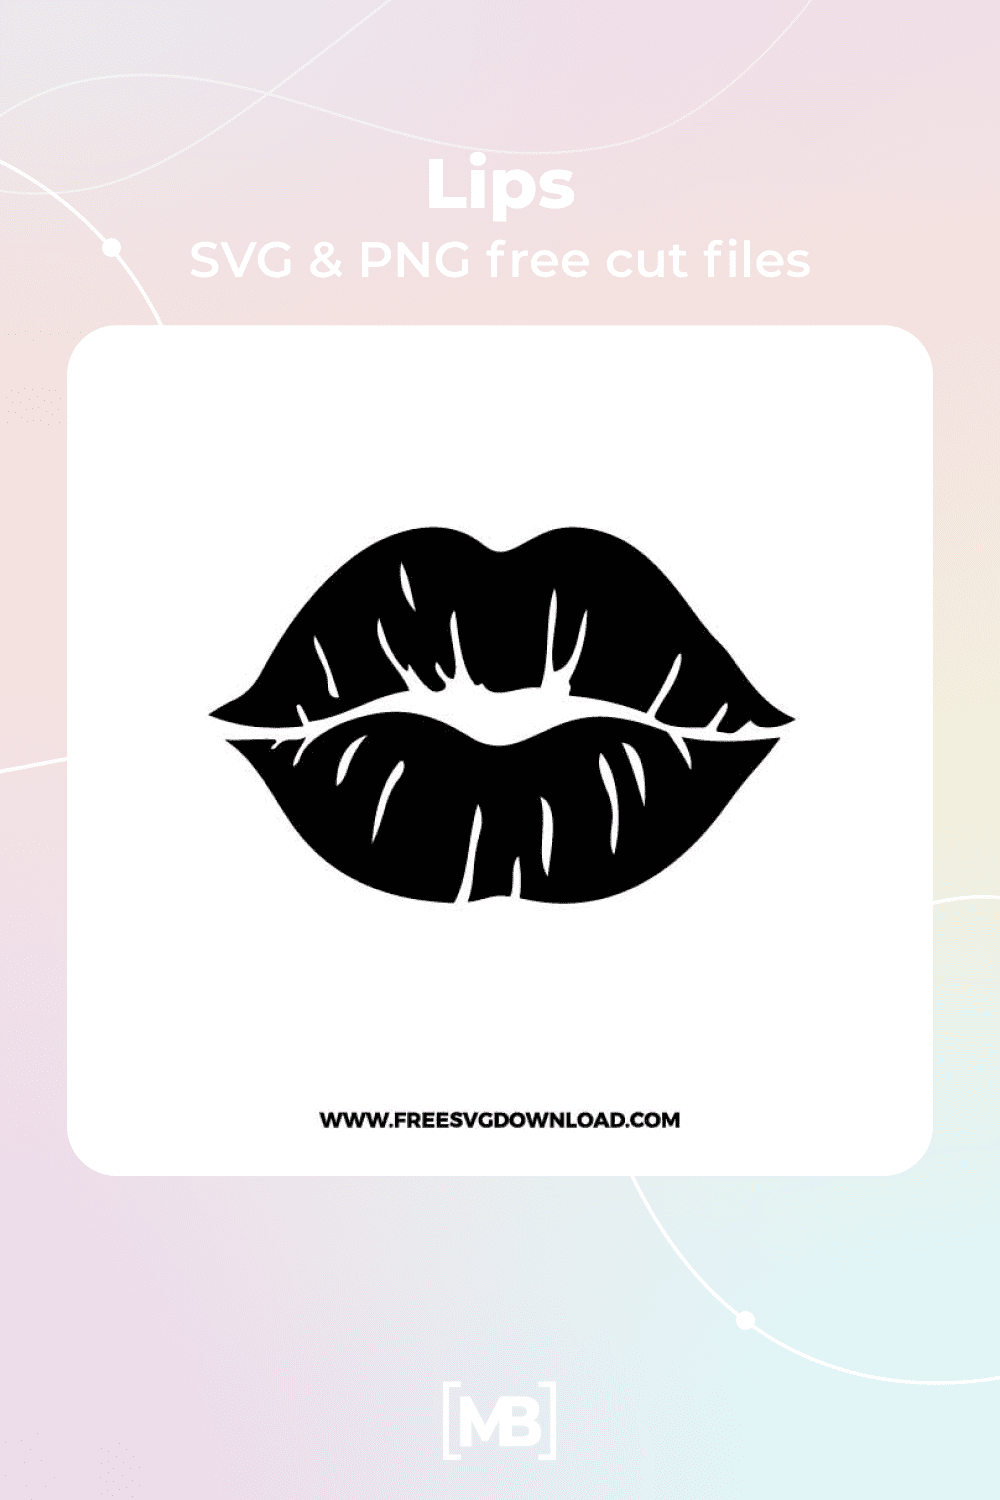 Lips SVG & PNG free cut files.